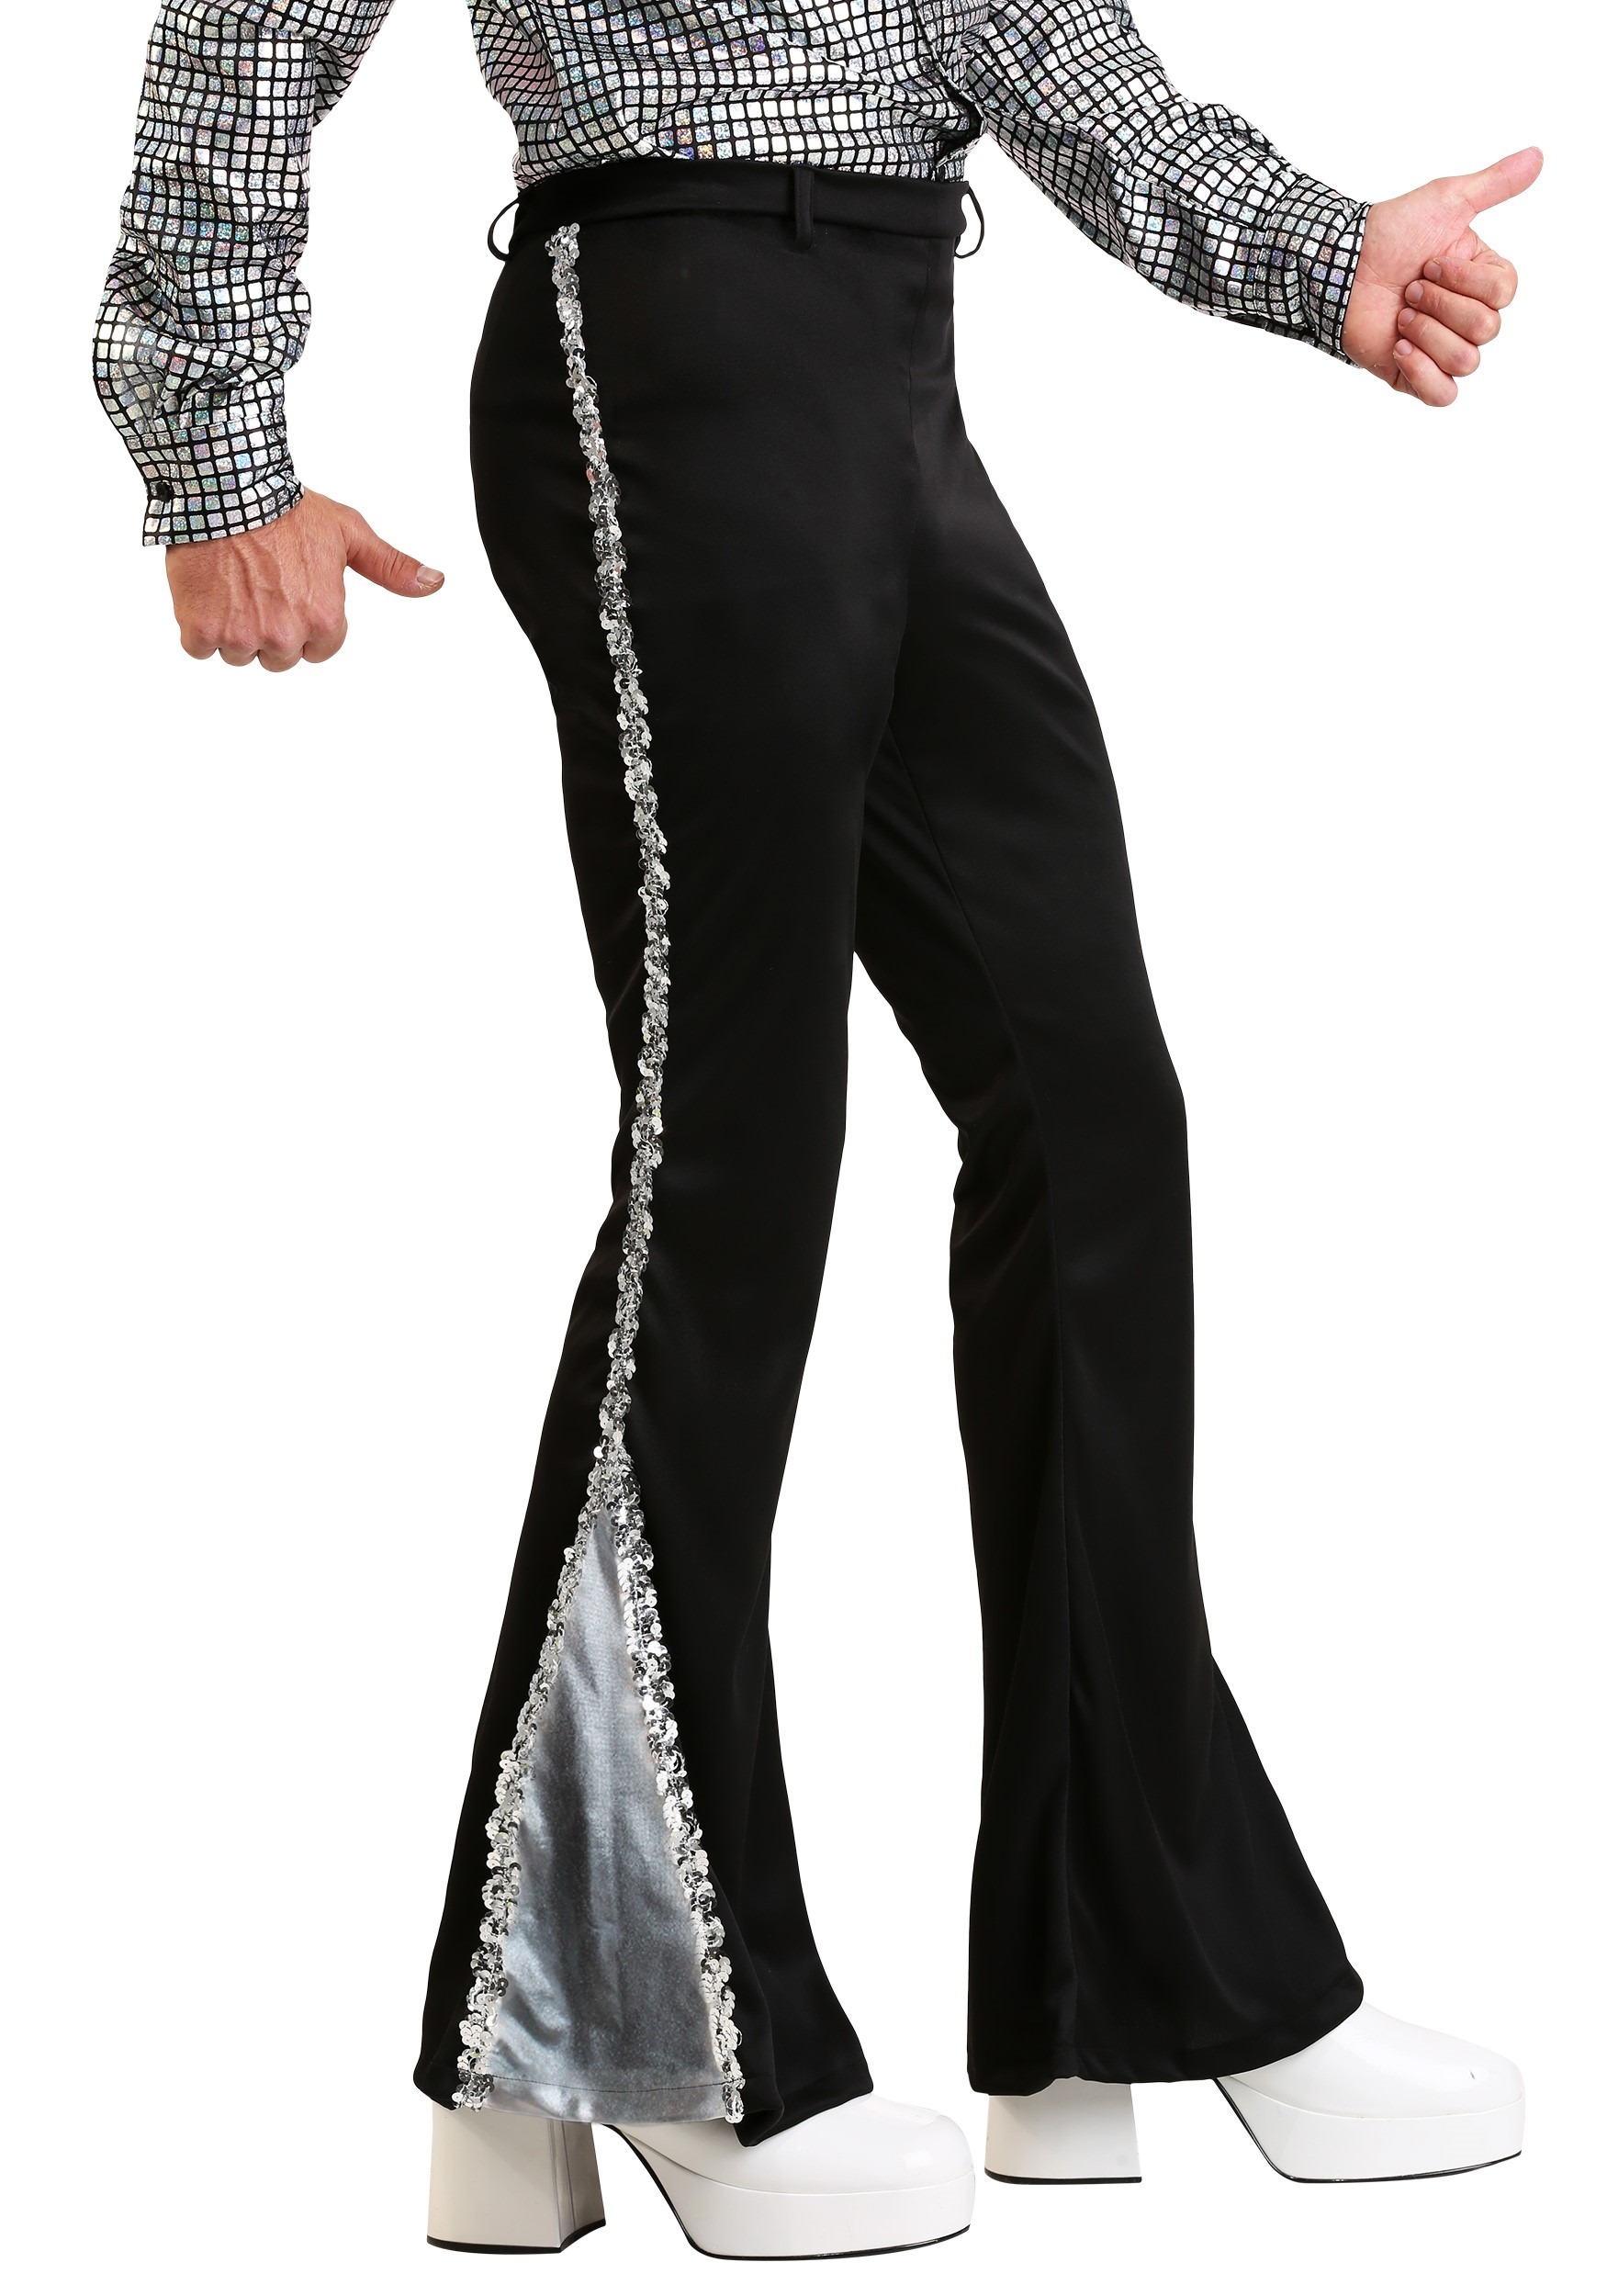 Men's Wet Look 70s Vintage Disco Long Pants Bell Bottom Flared Trousers  Costume | eBay